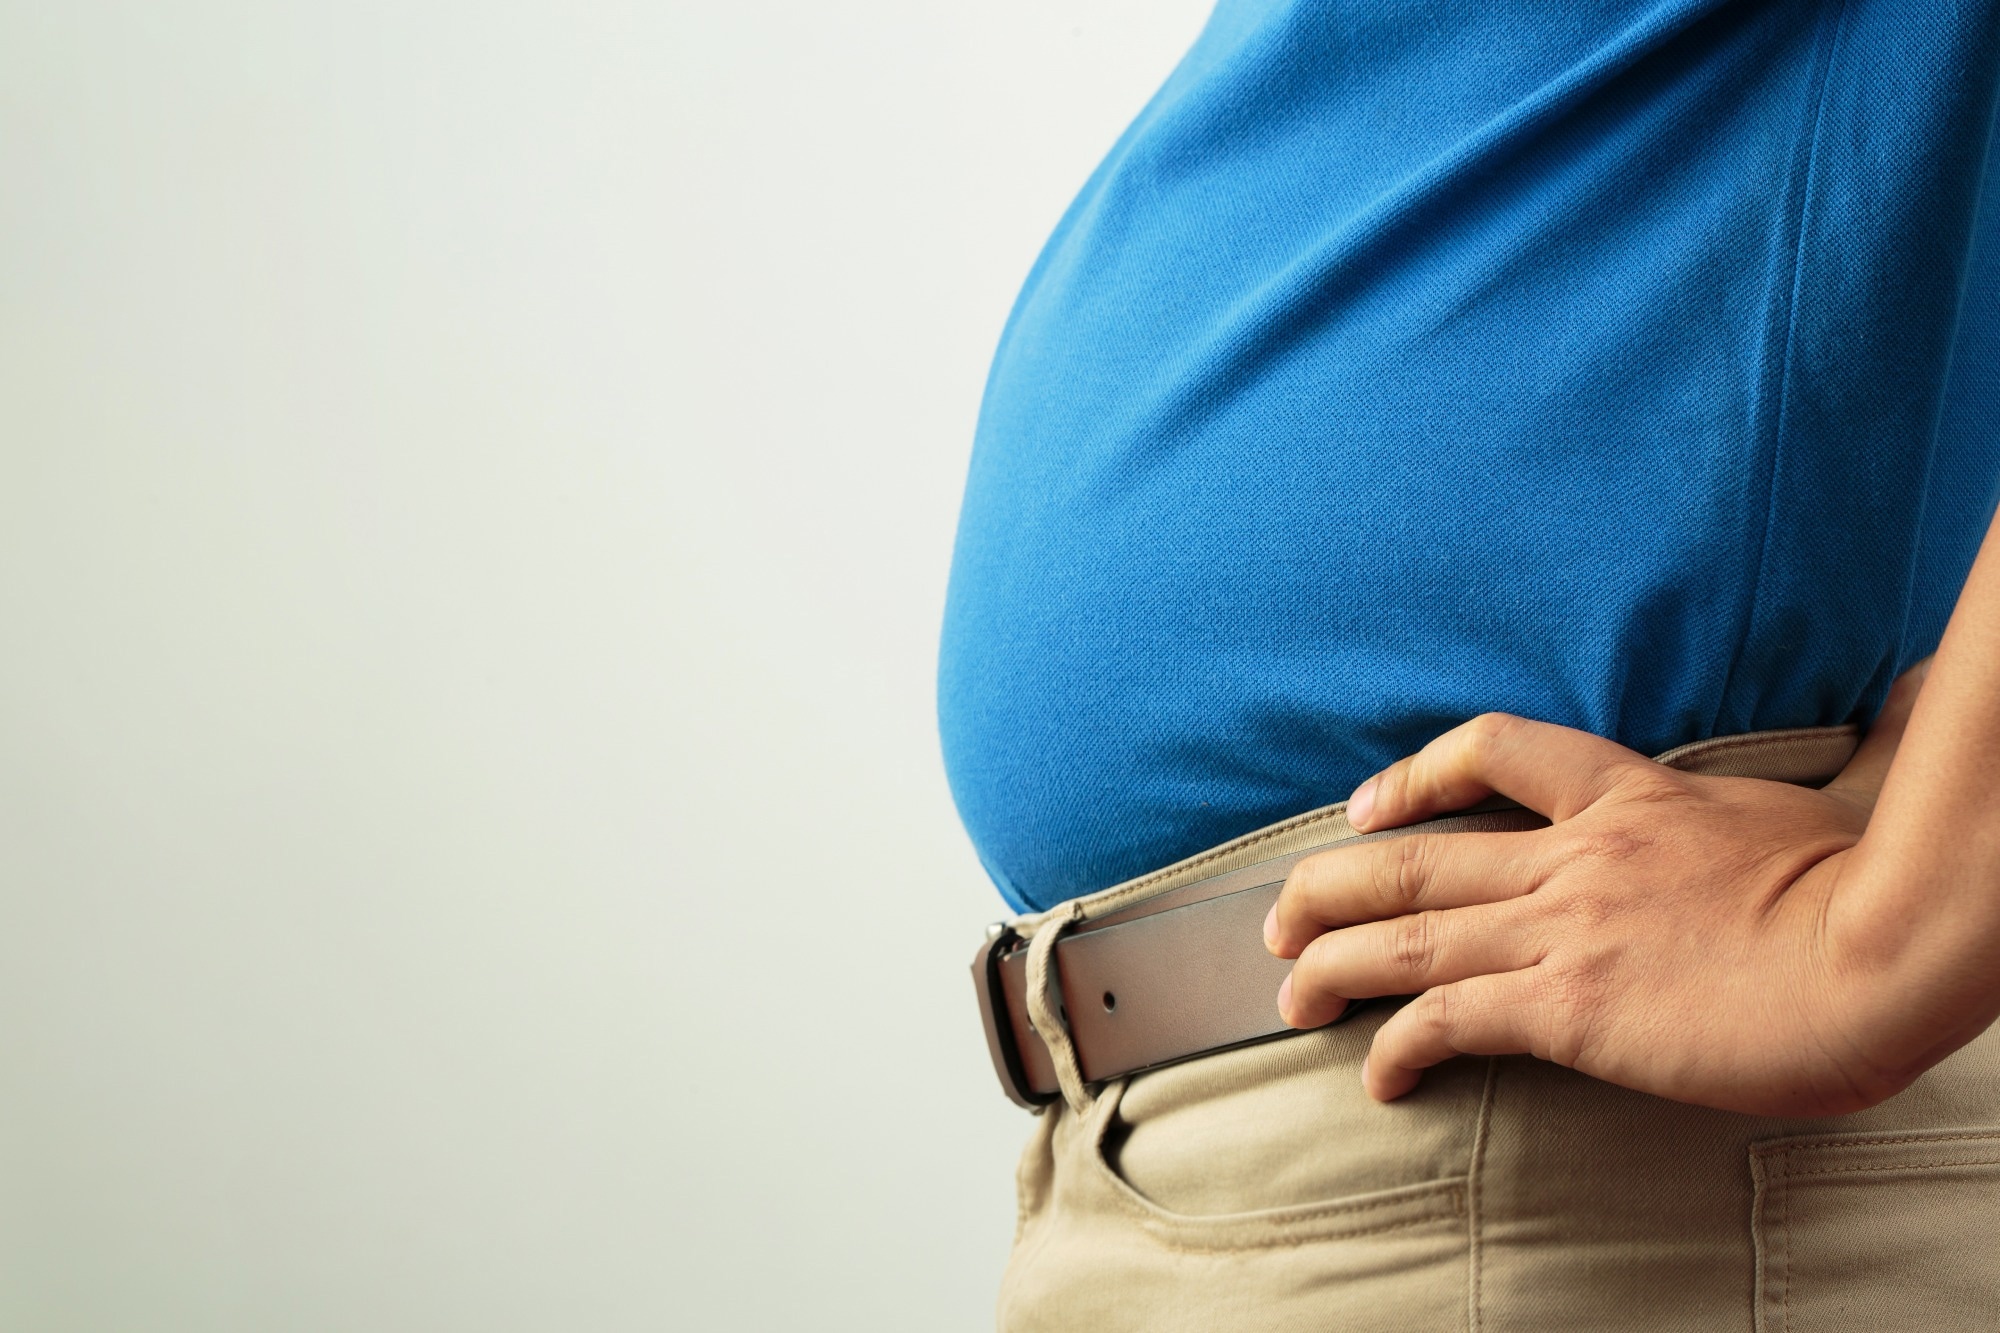 Abdominal obesity triggers a cytokine storm